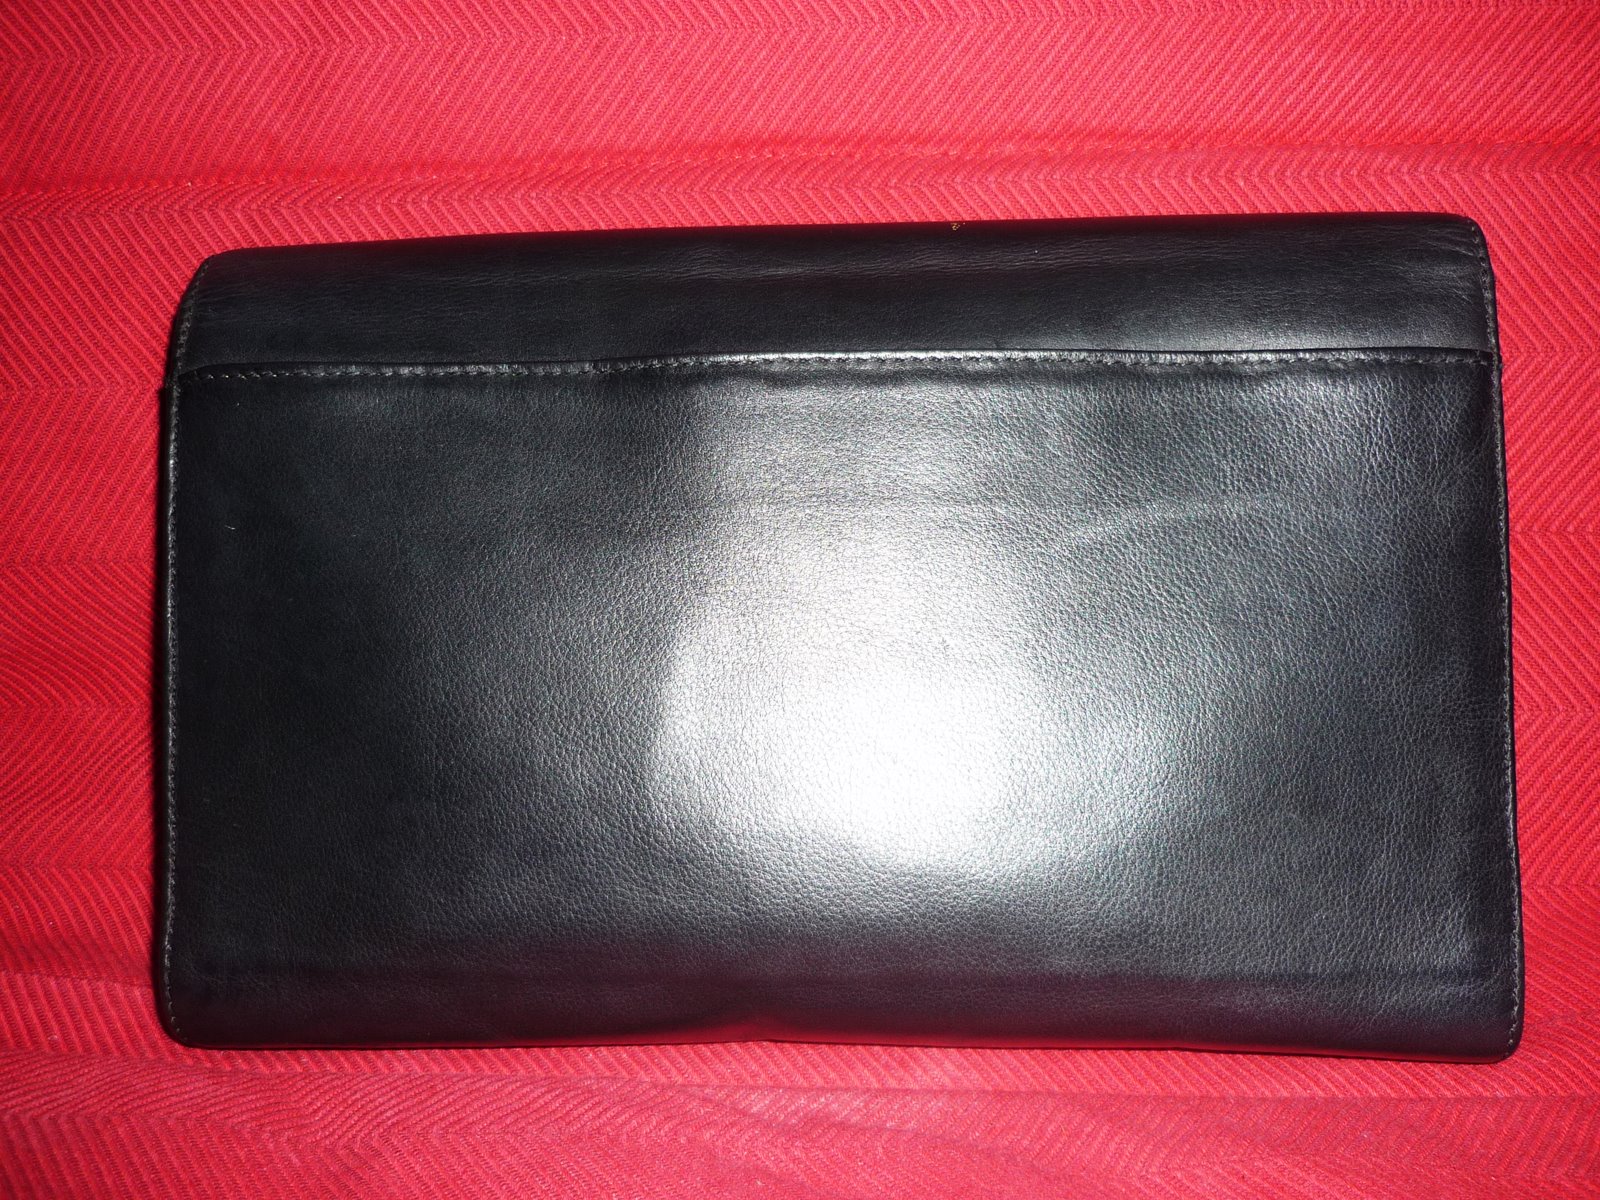 YUS BRANDED BAG: authentic braun buffel leather clutch bag